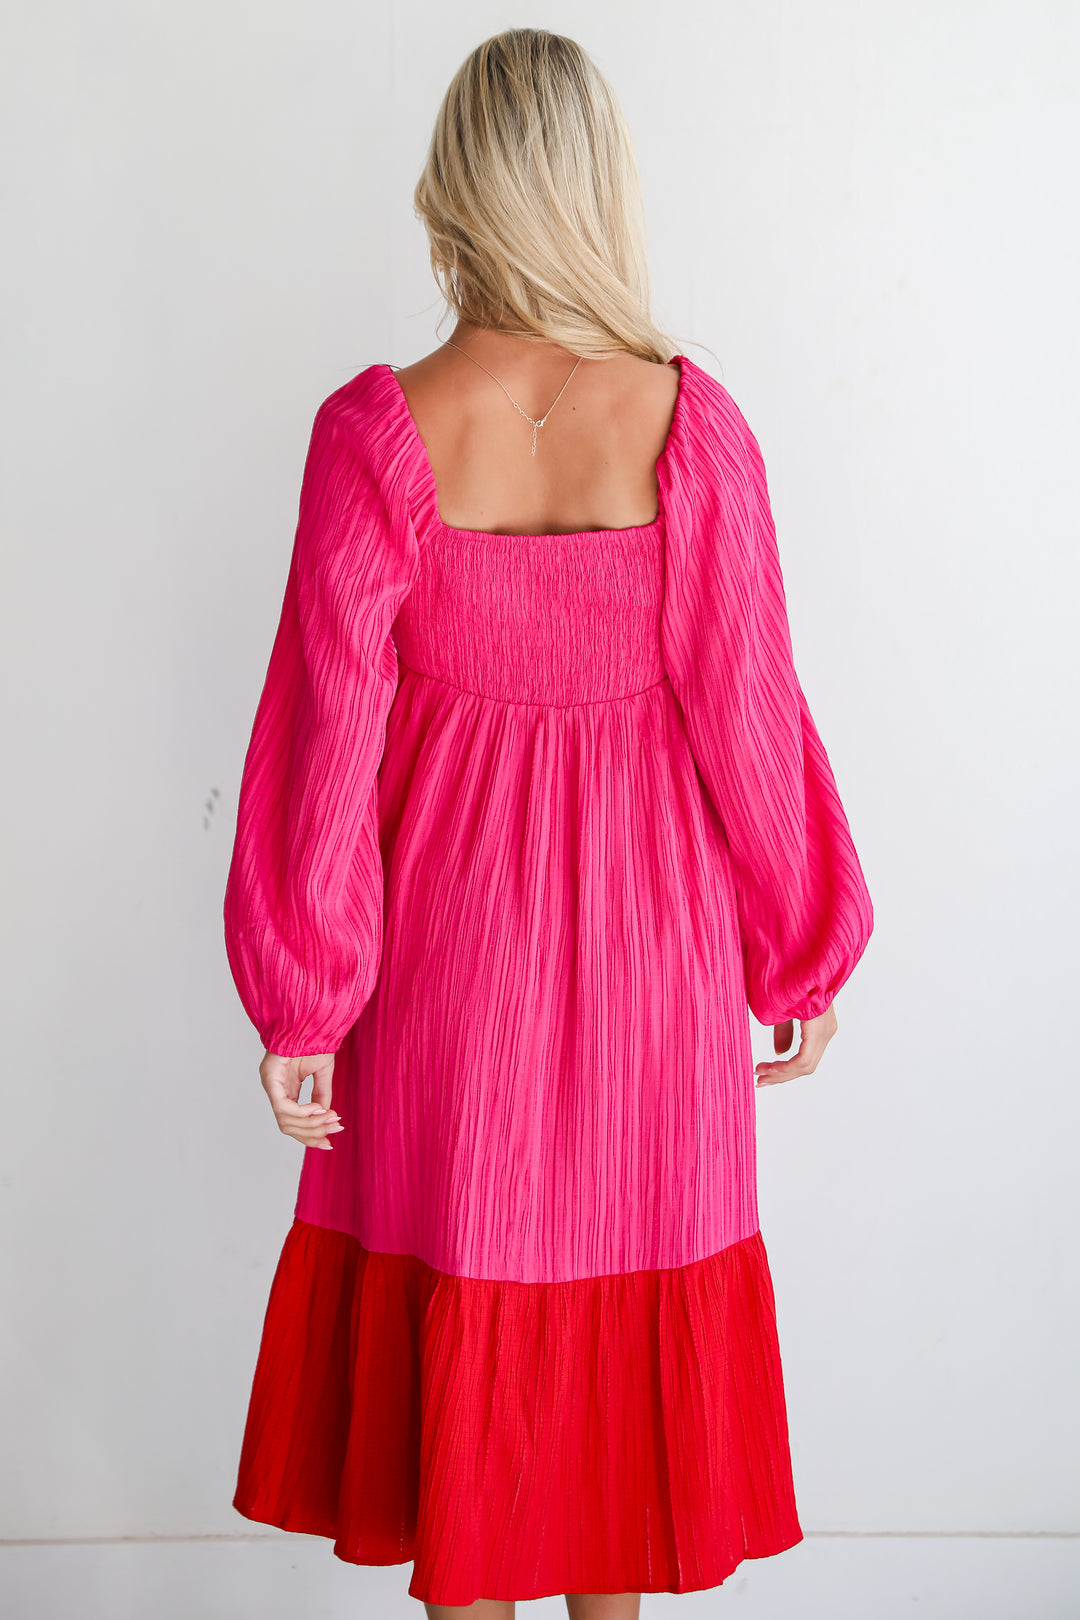 pink dress for women